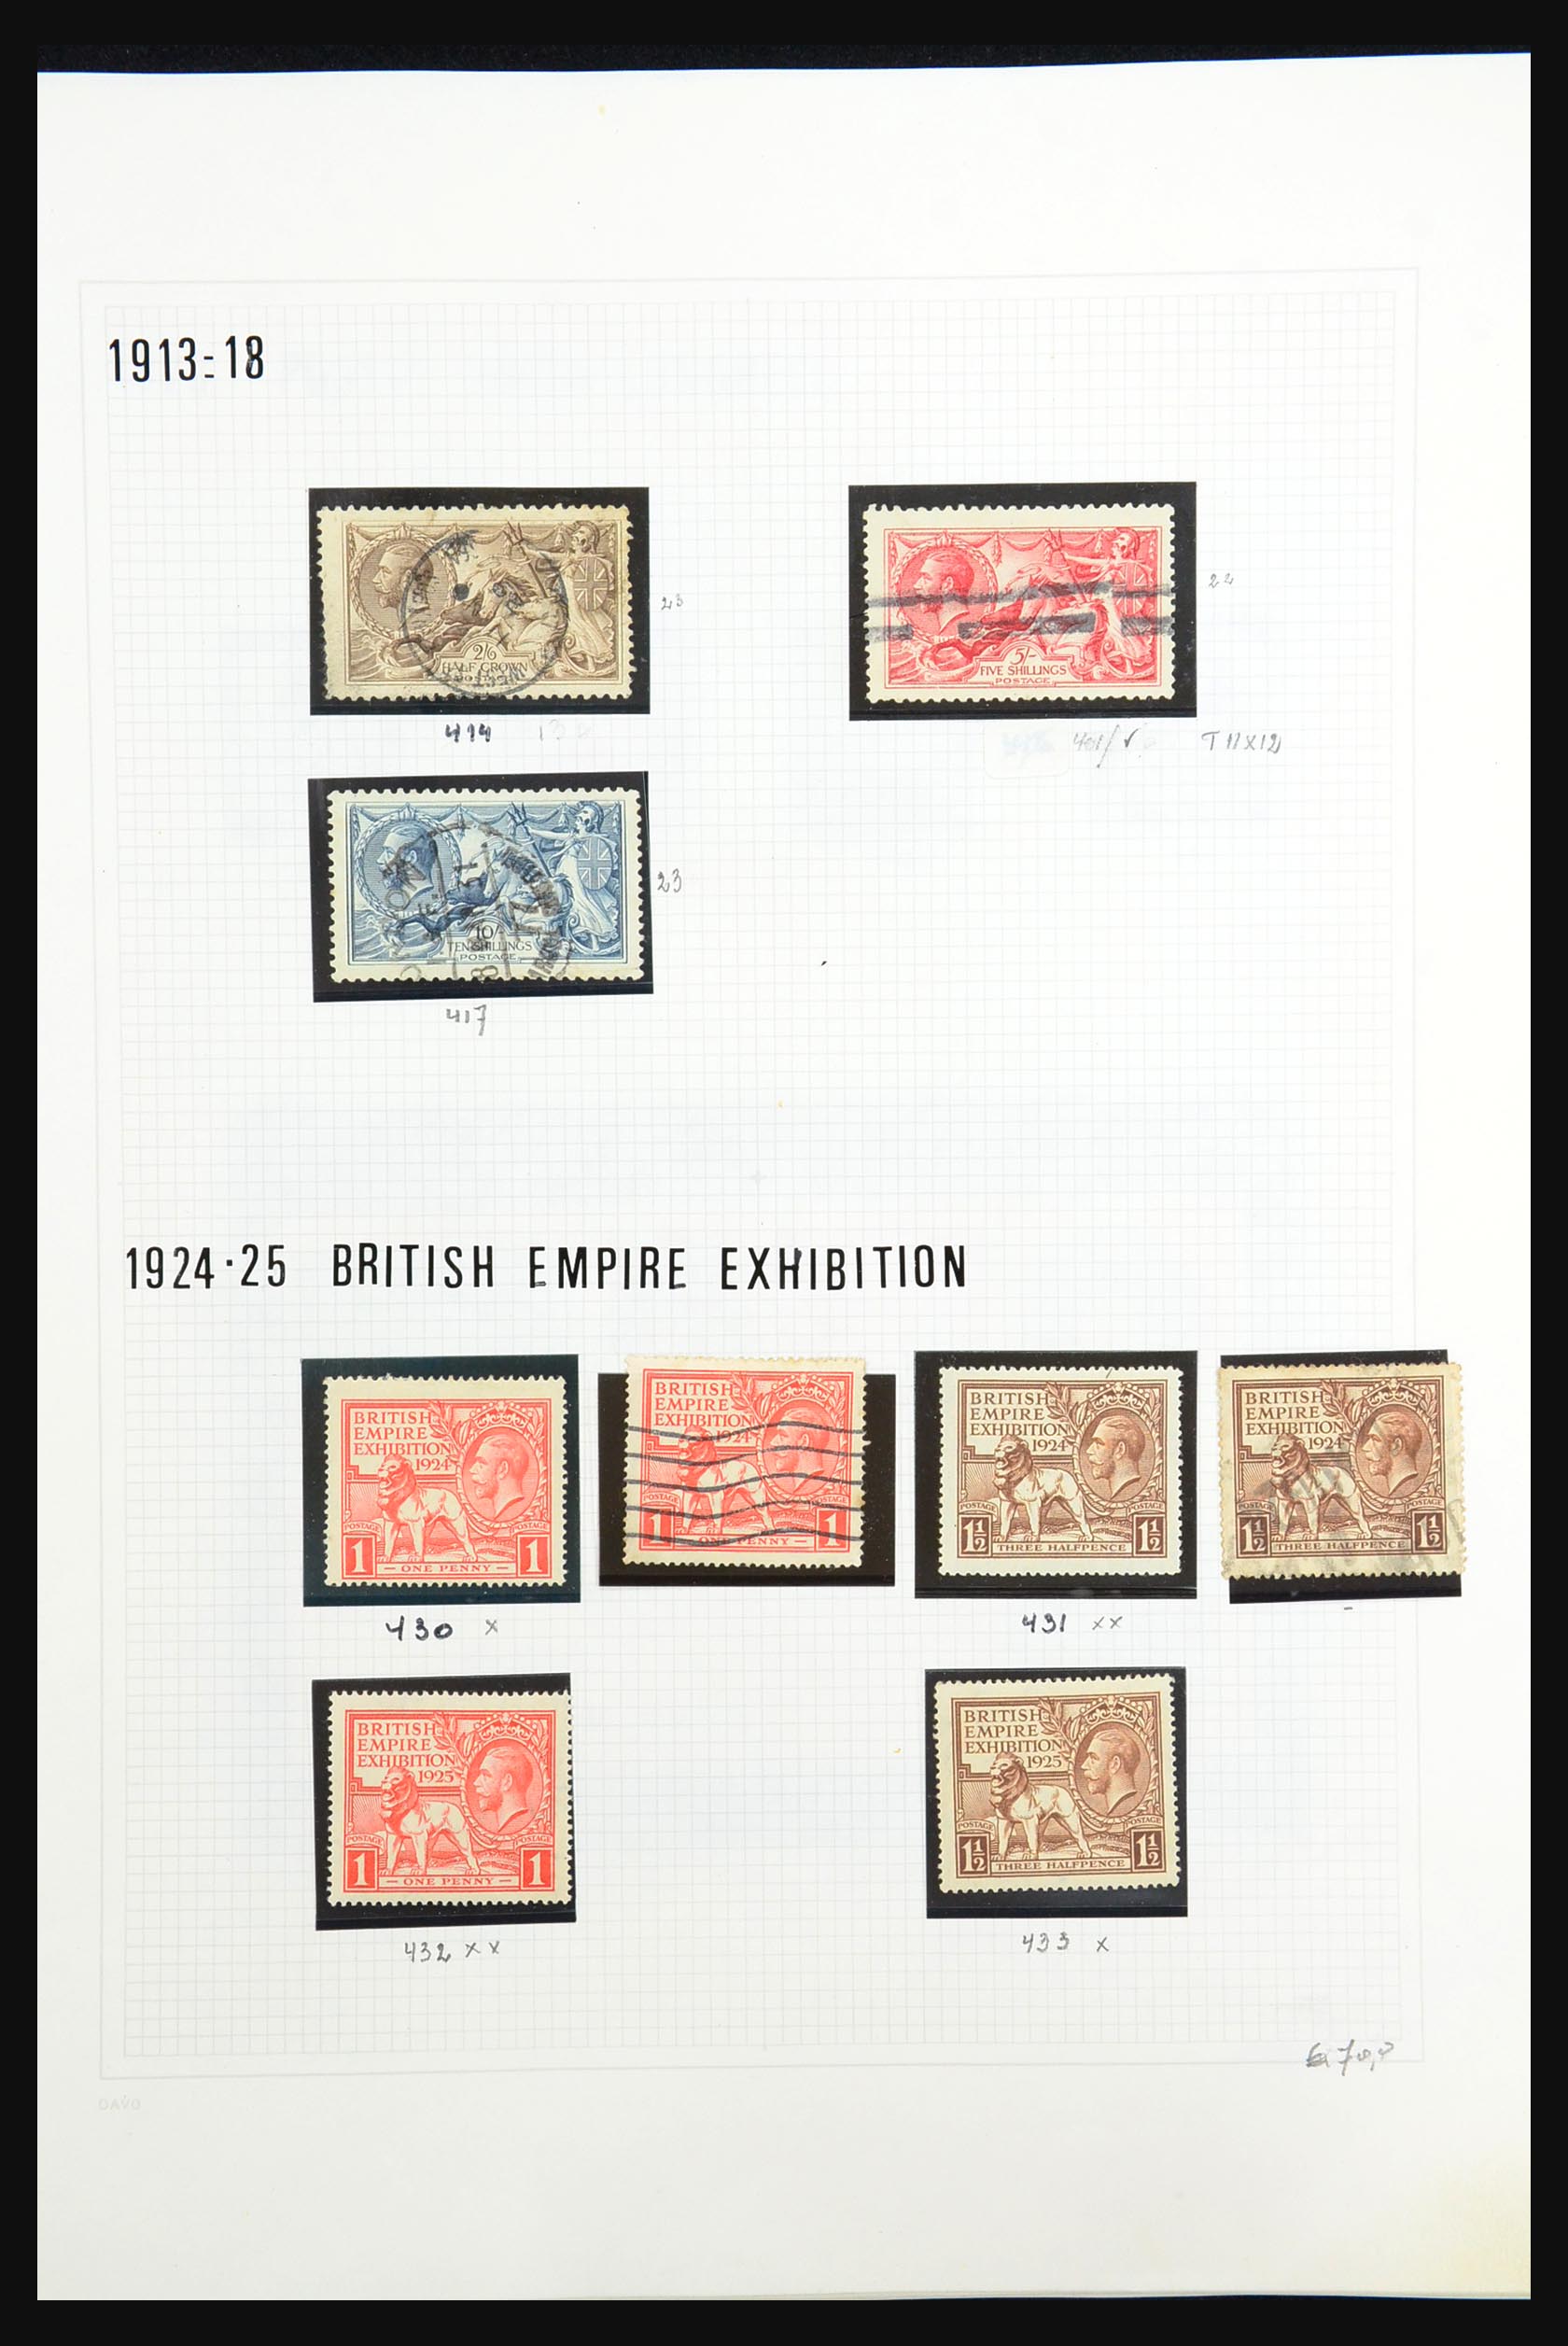 31348 025 - 31348 Great Britain 1840-1945.